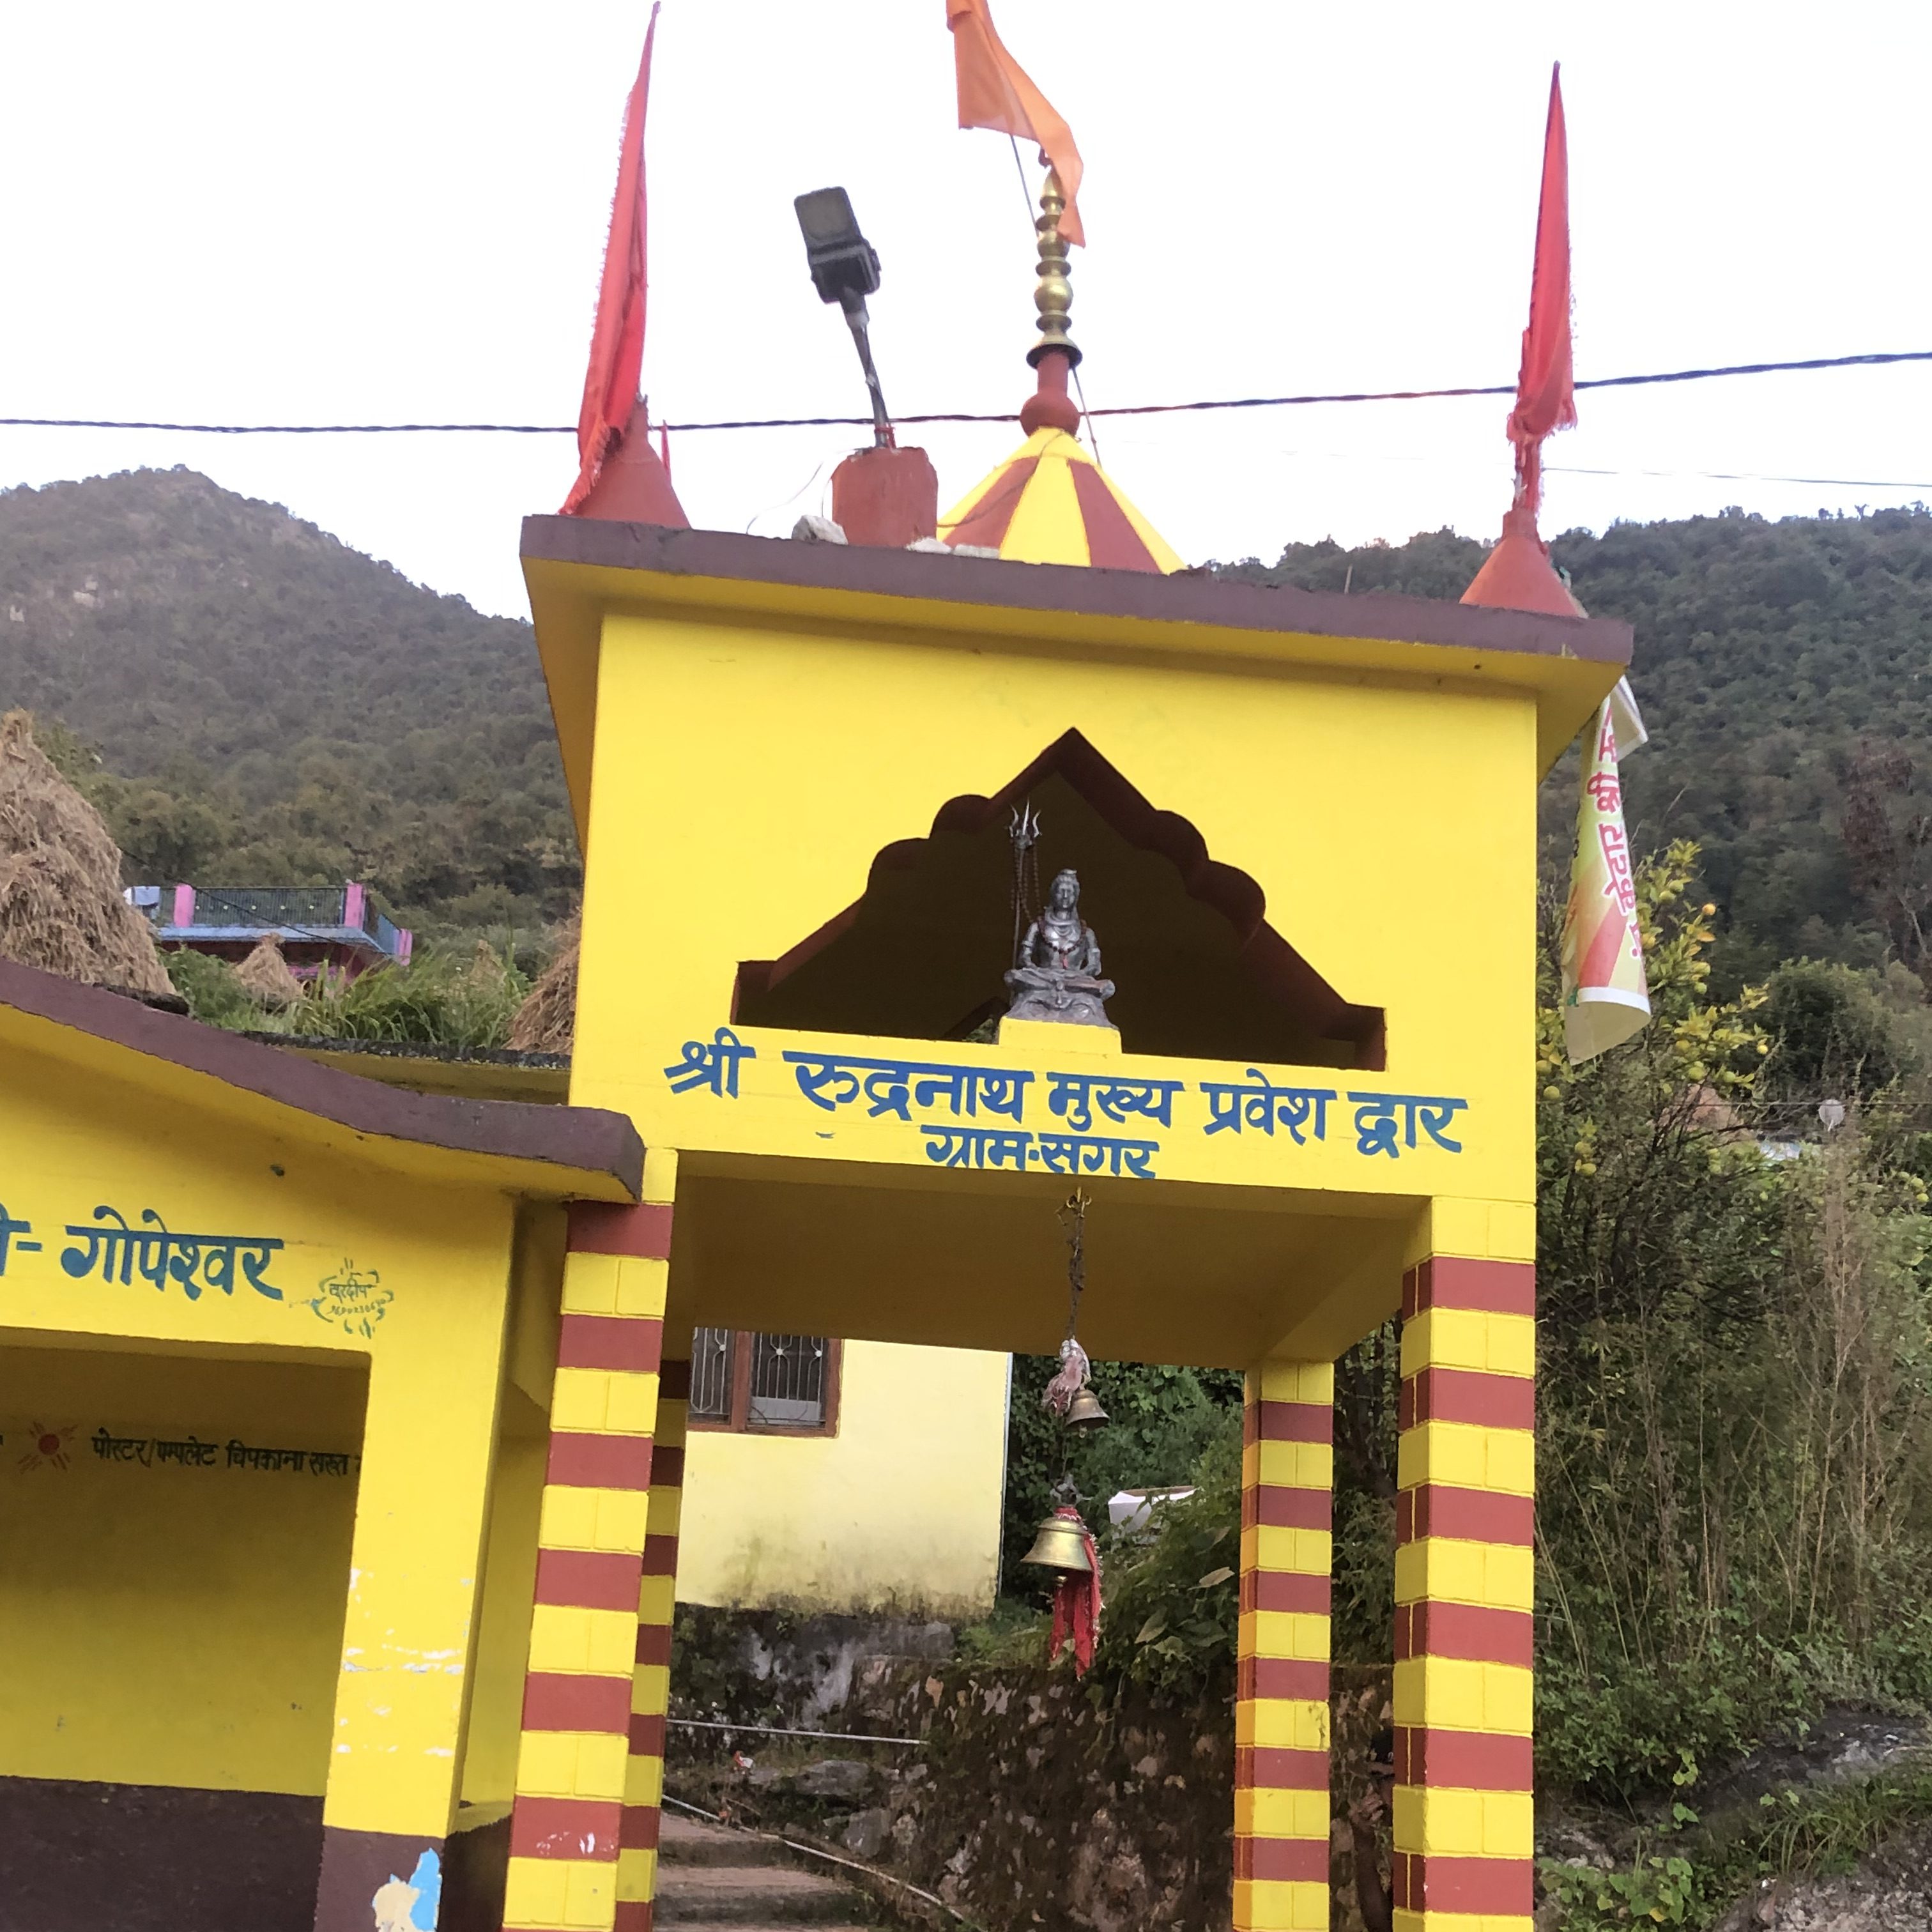 Entrance gate to Rudranath trek, District Chamoli, Uttarakhand